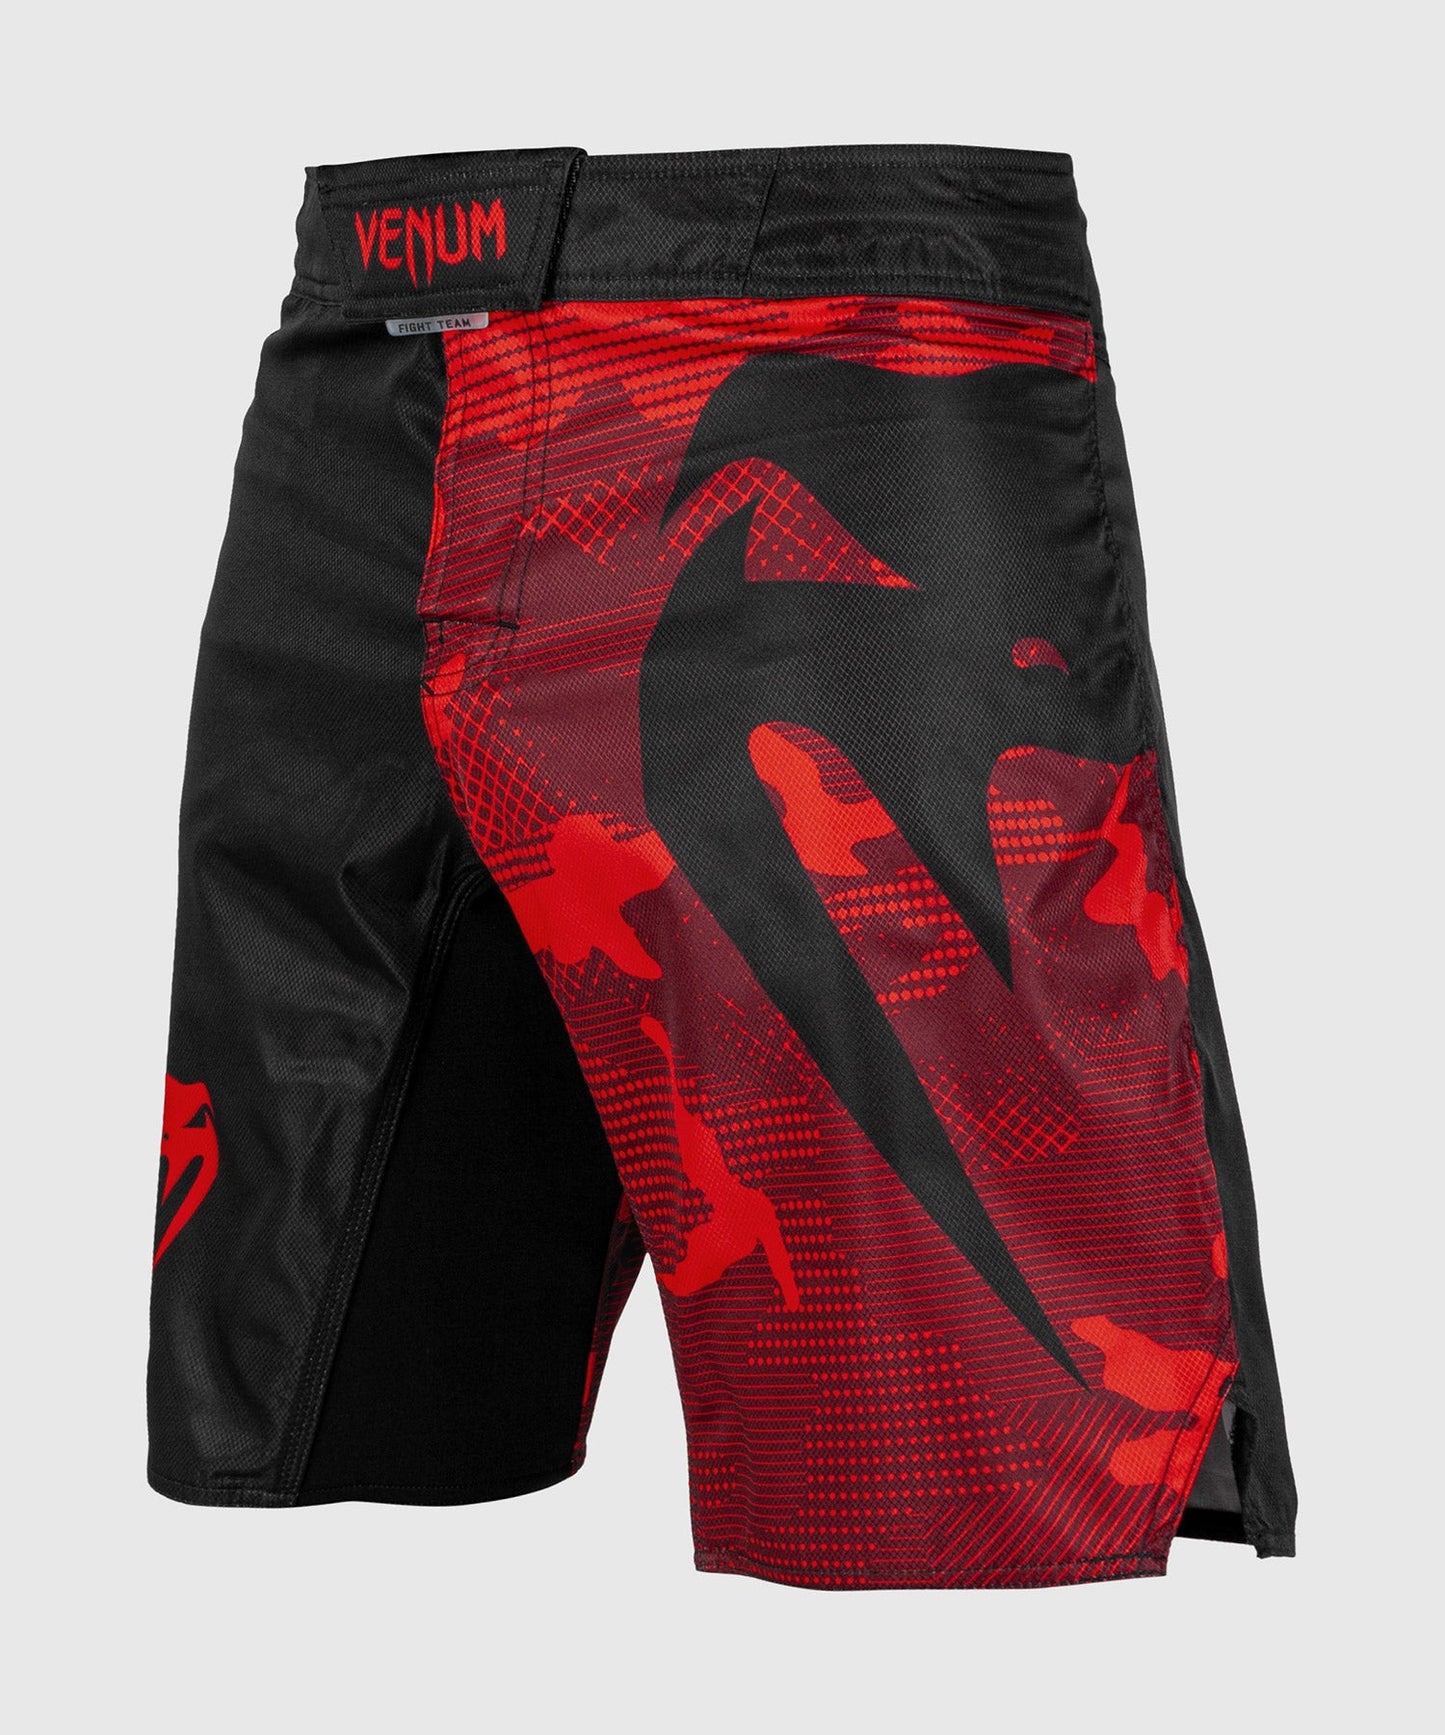 Venum Light 3.0 Fightshorts - Red/Black